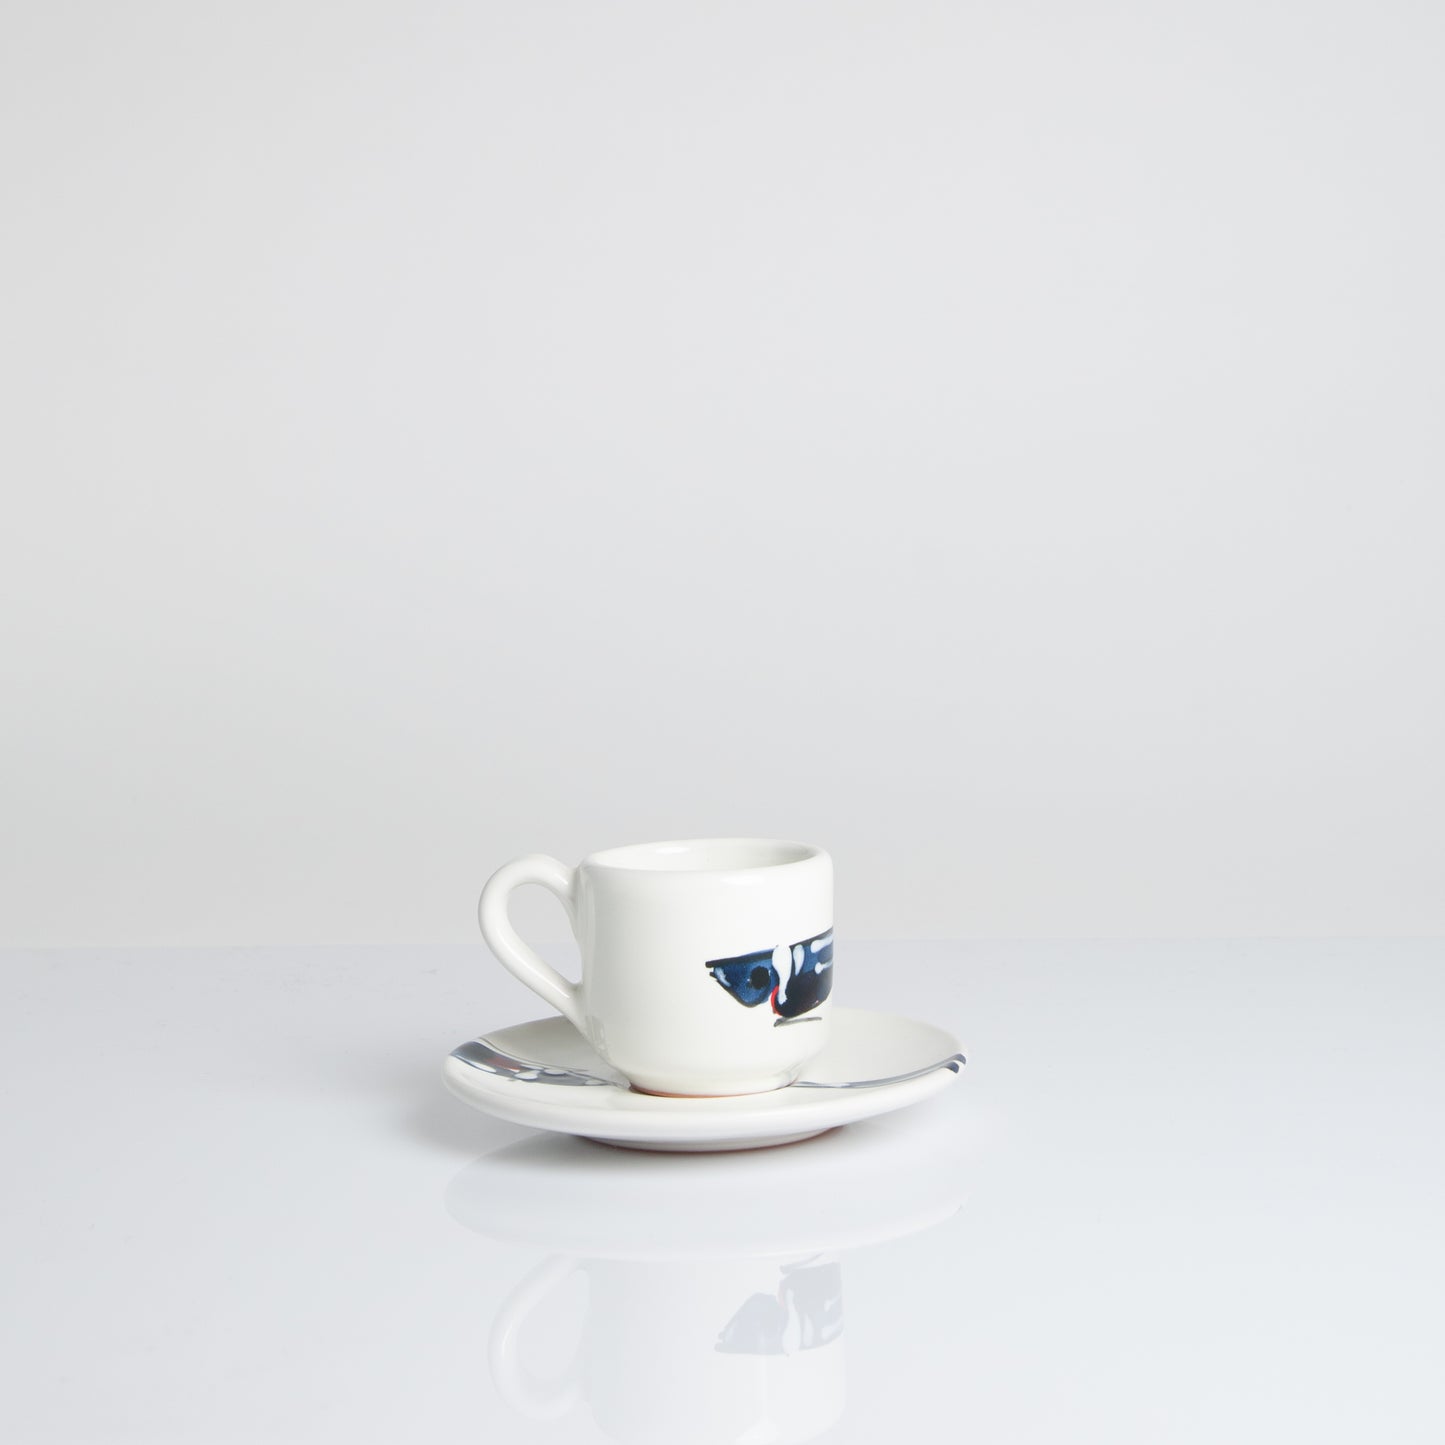 Iscalonga coffee cup with saucer